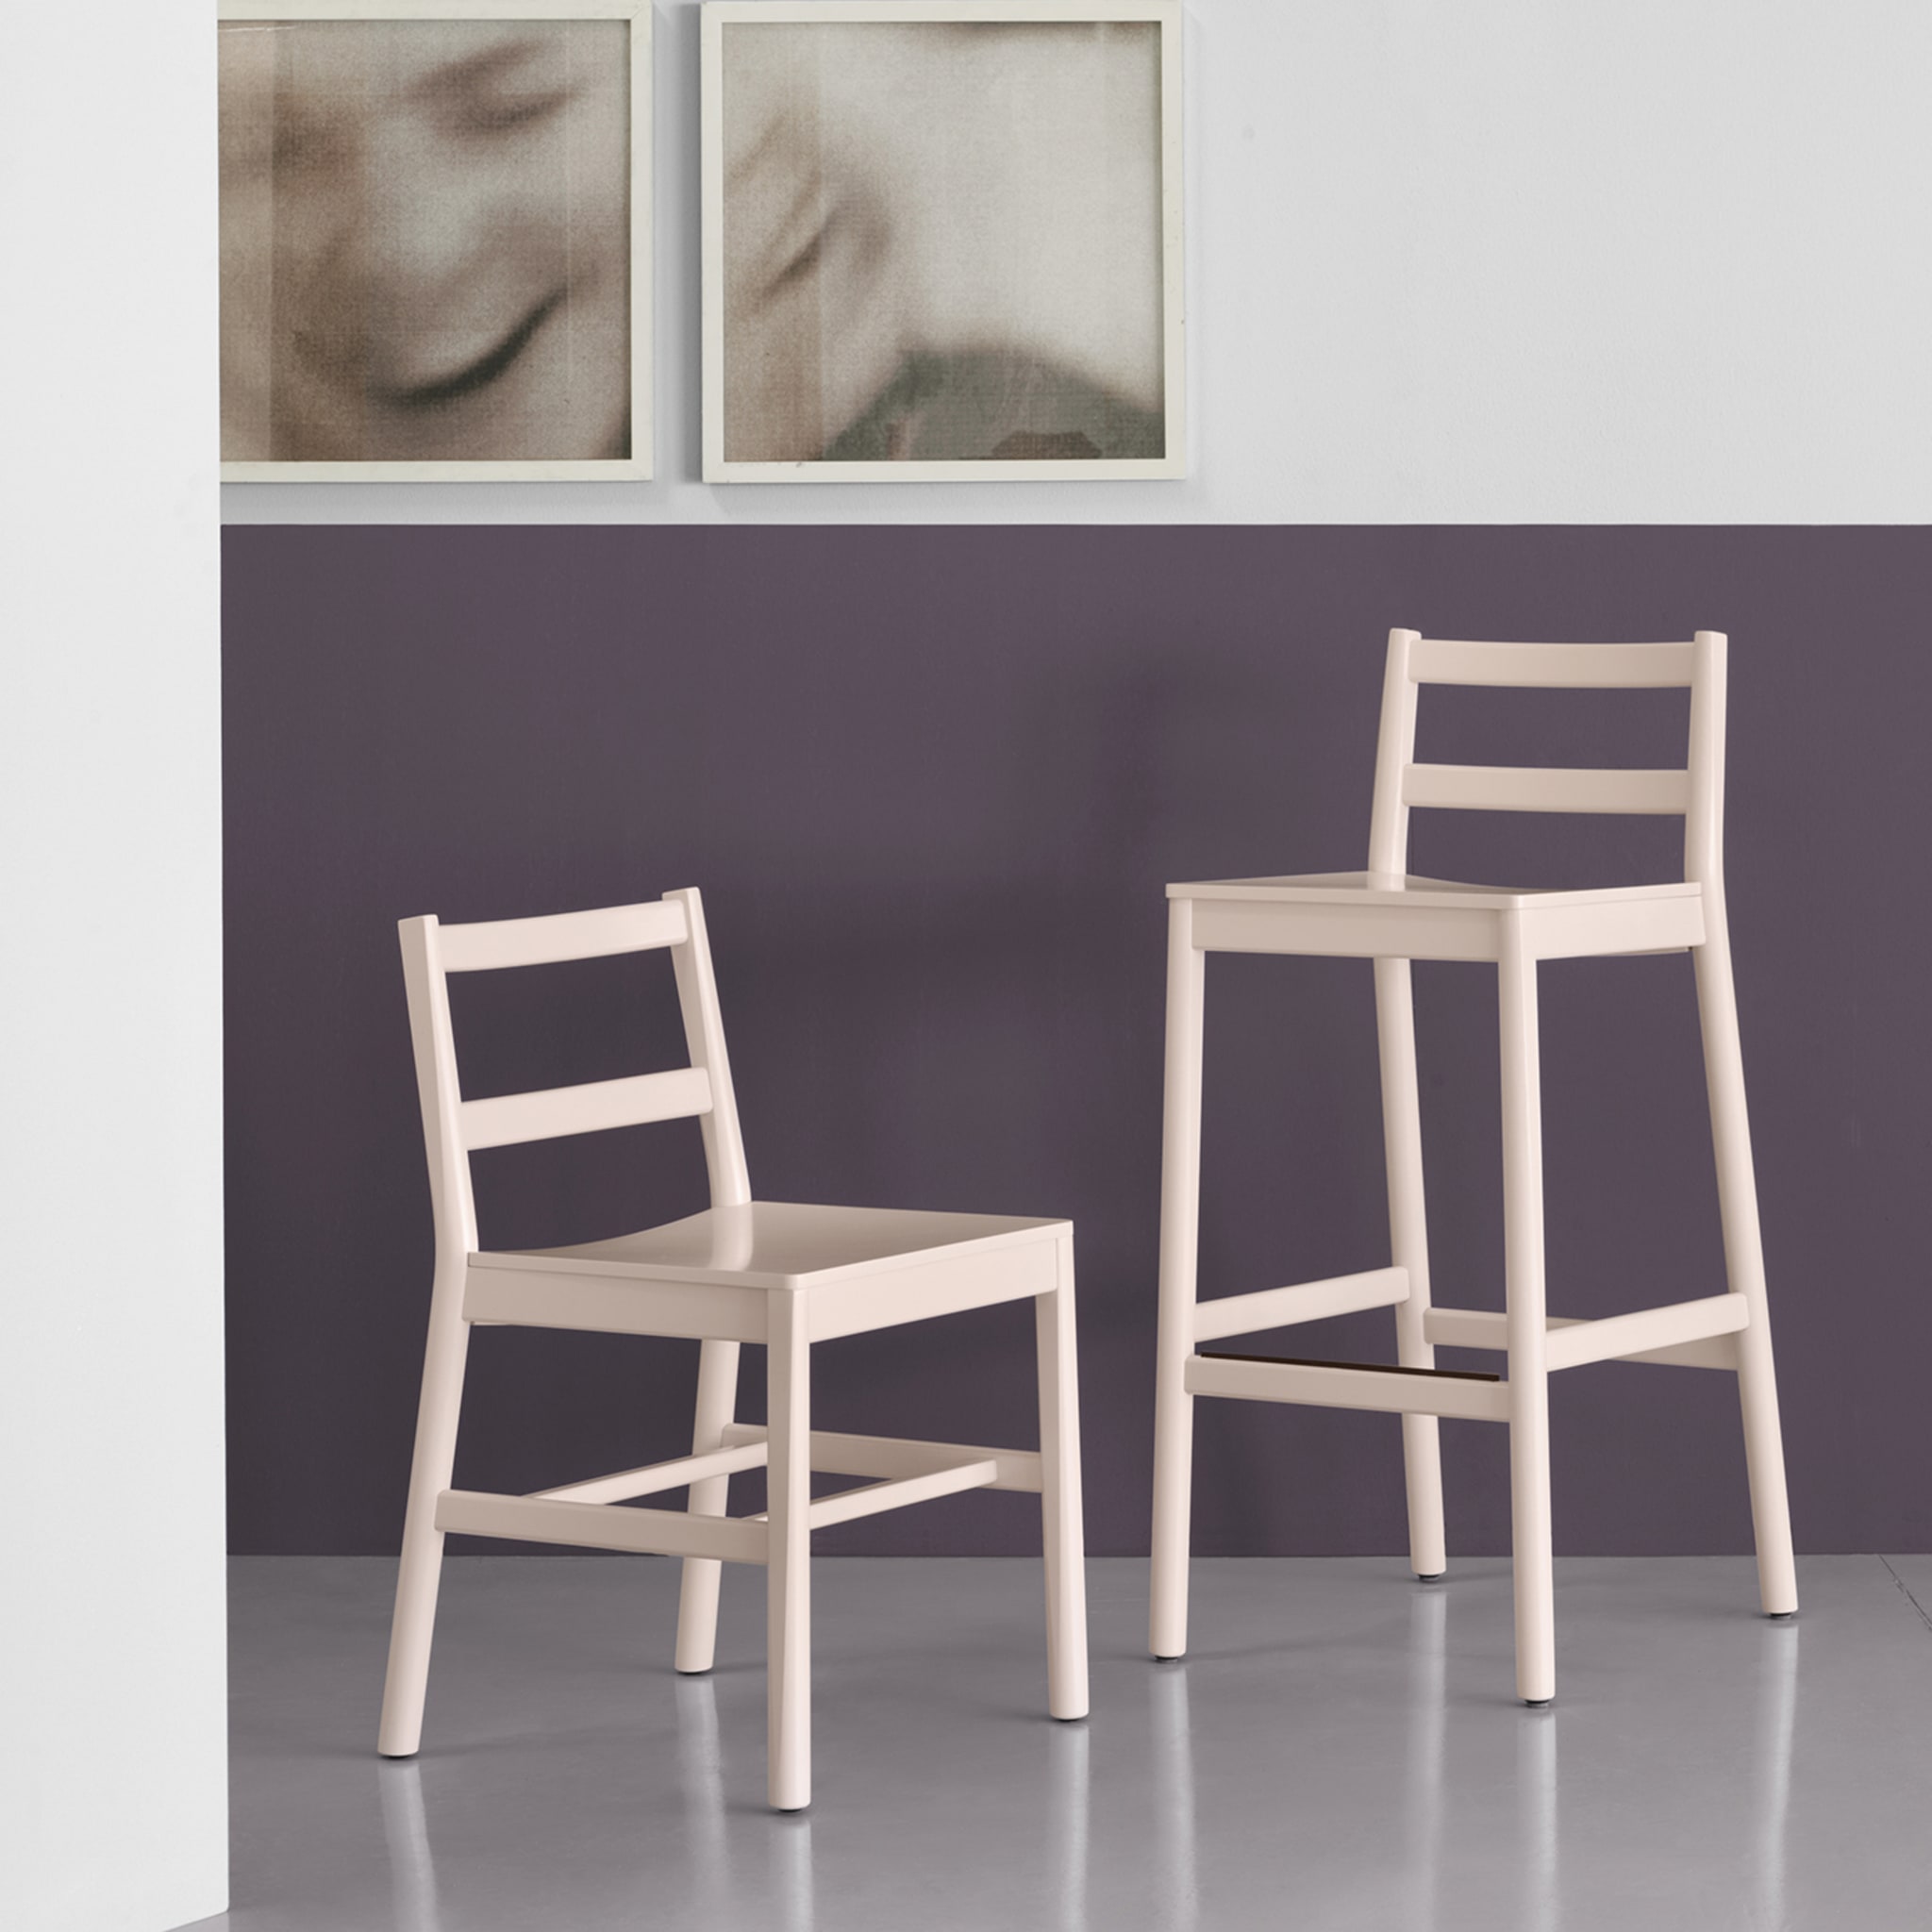 Julie Chair by Emilio Nanni - Alternative view 1